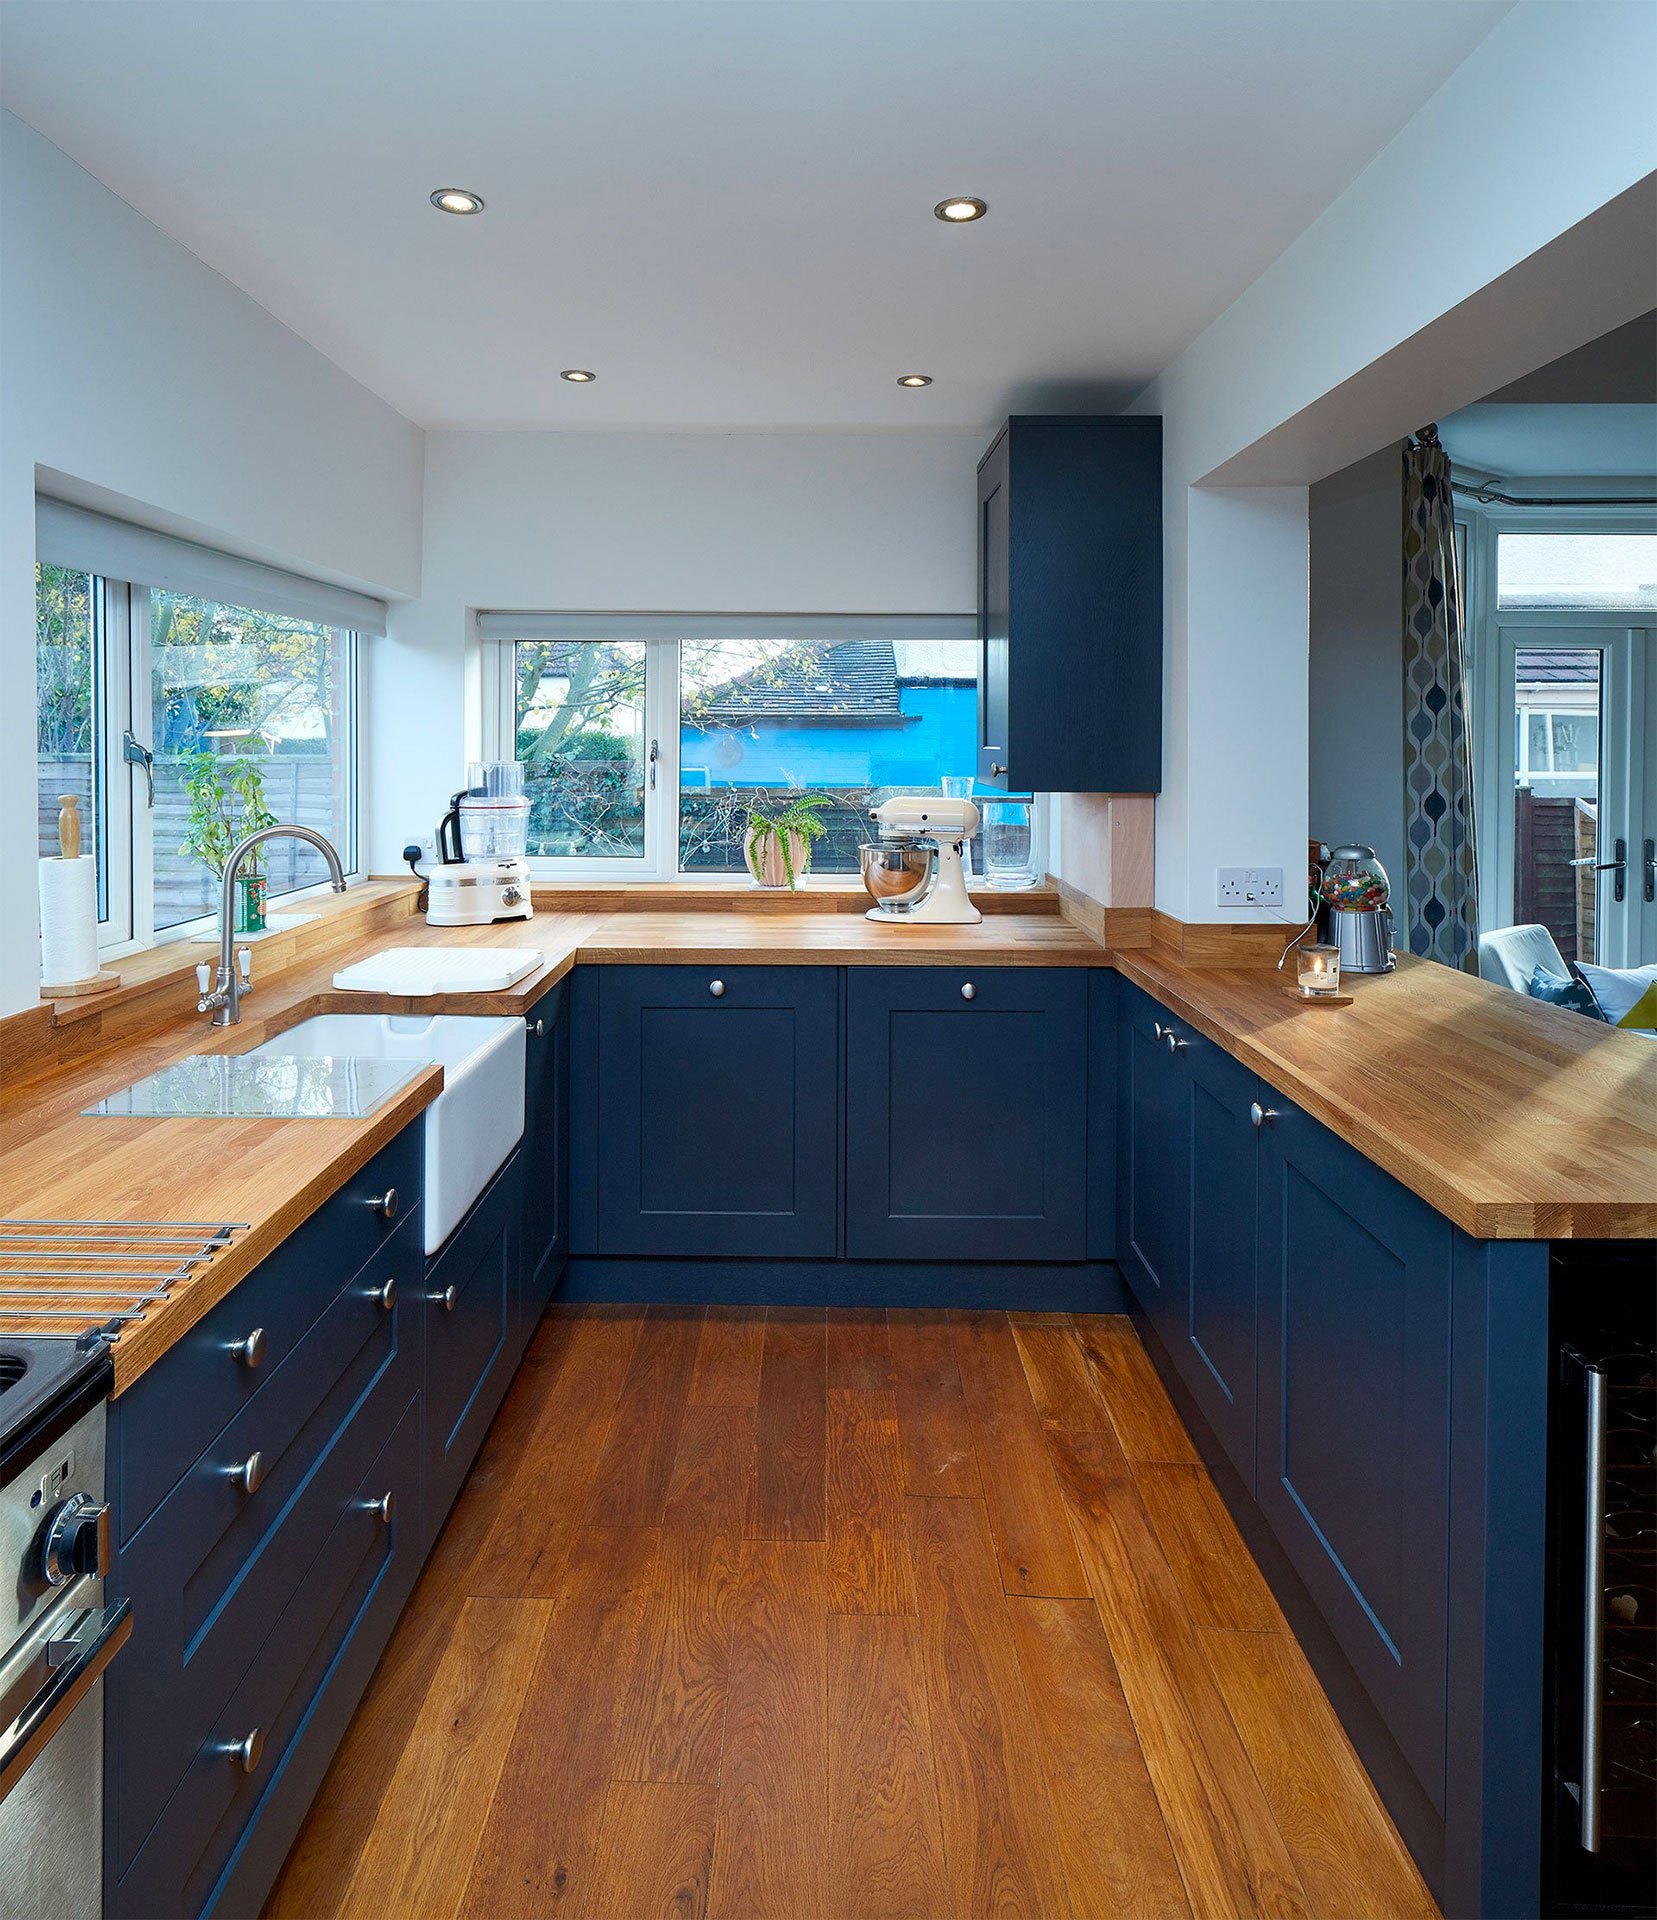 Белая кухня синяя столешница. Синяя кухня с деревянной столешницей. Кухни синего цвета с деревянной столешницей. Кухня синяя матовая с деревянной столешницей. Синяя кухня со столешницей под дерево.